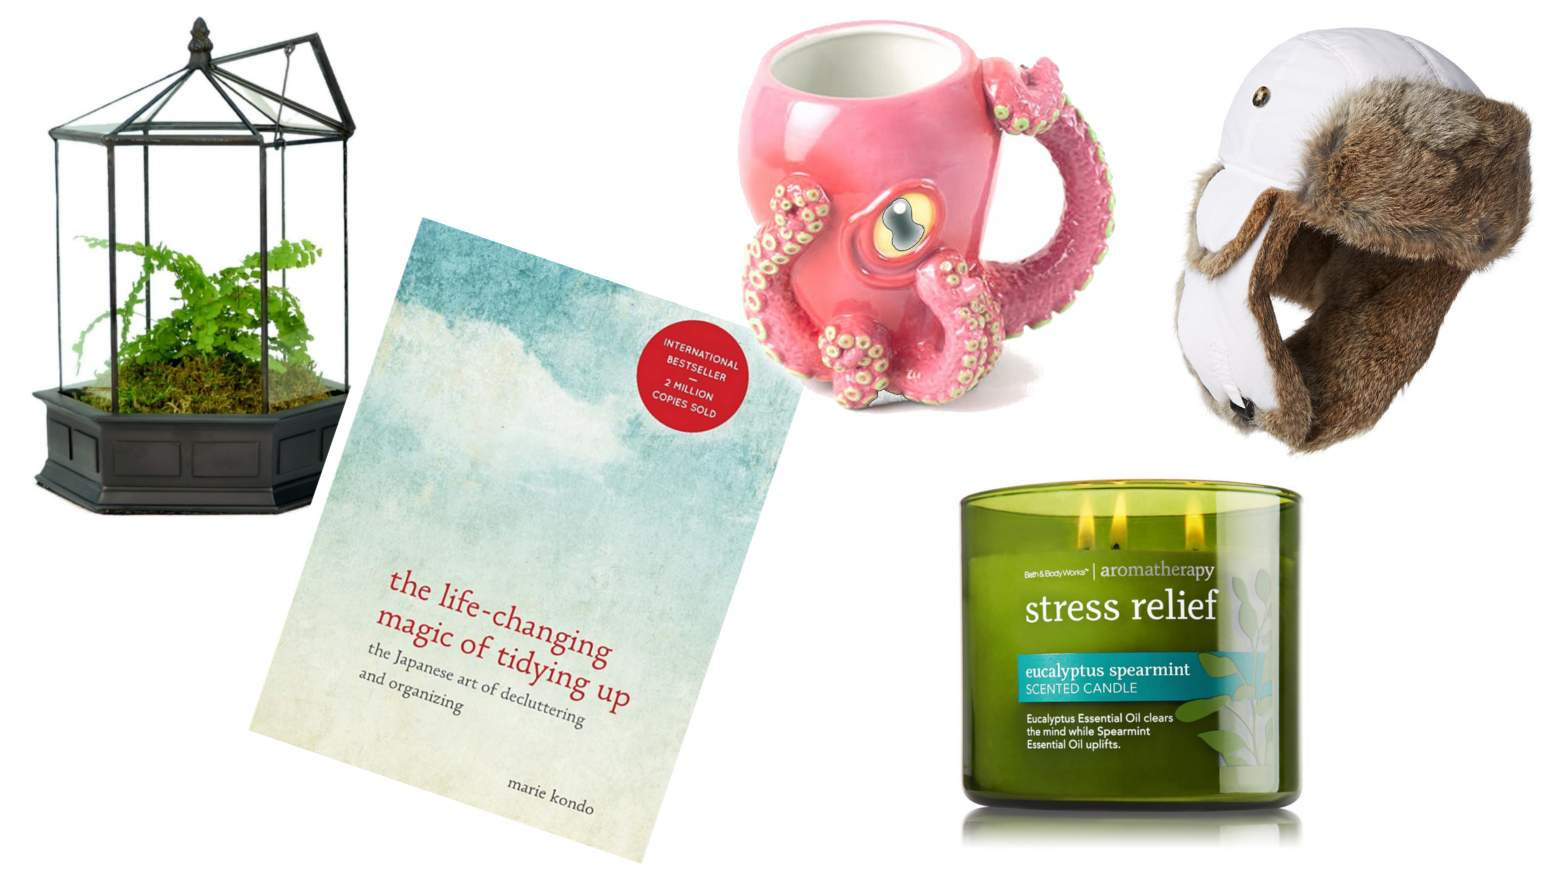 Best Girlfriend Gift Ideas
 Top 20 Best Gifts for Your Girlfriend